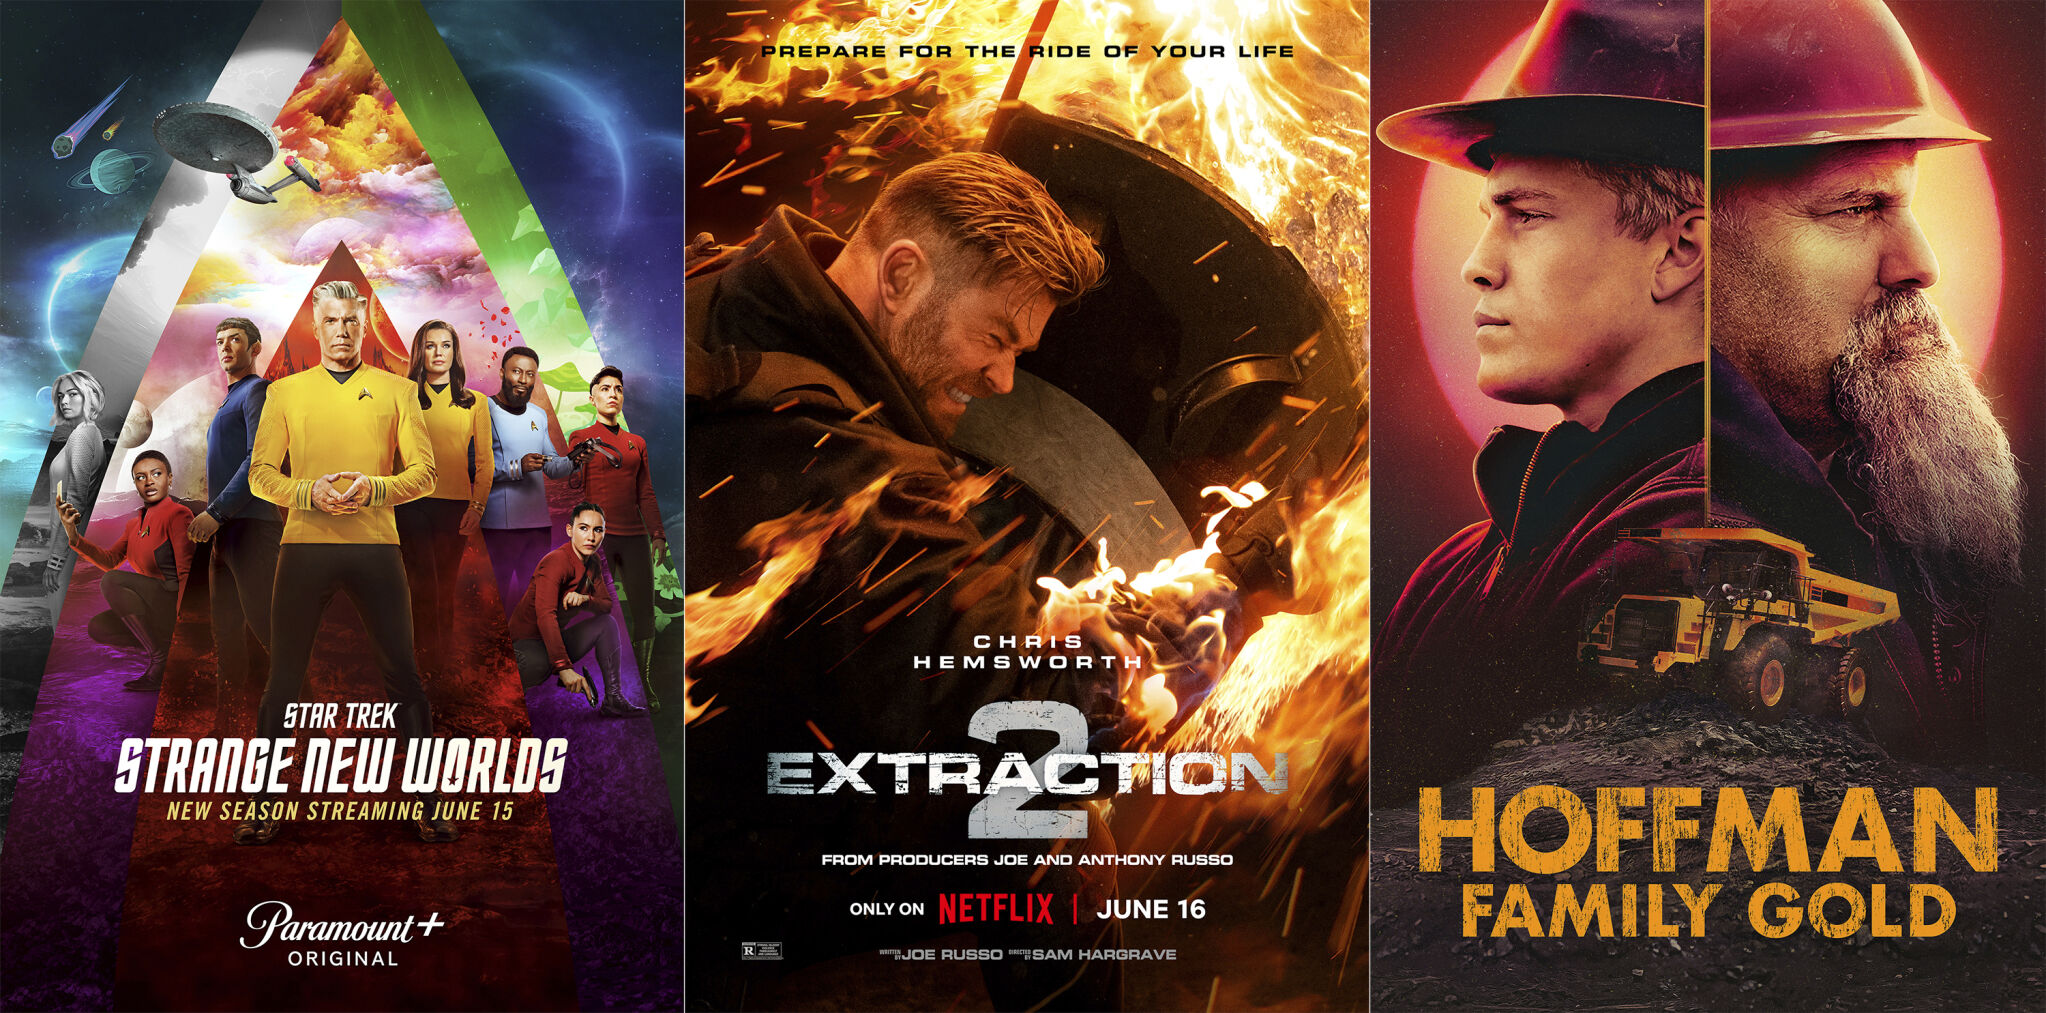 What to Stream This Week: Netflix's 'Extraction 2', 'Star Trek: Strange New Worlds' Season 2 and 'Outlander' Season 7